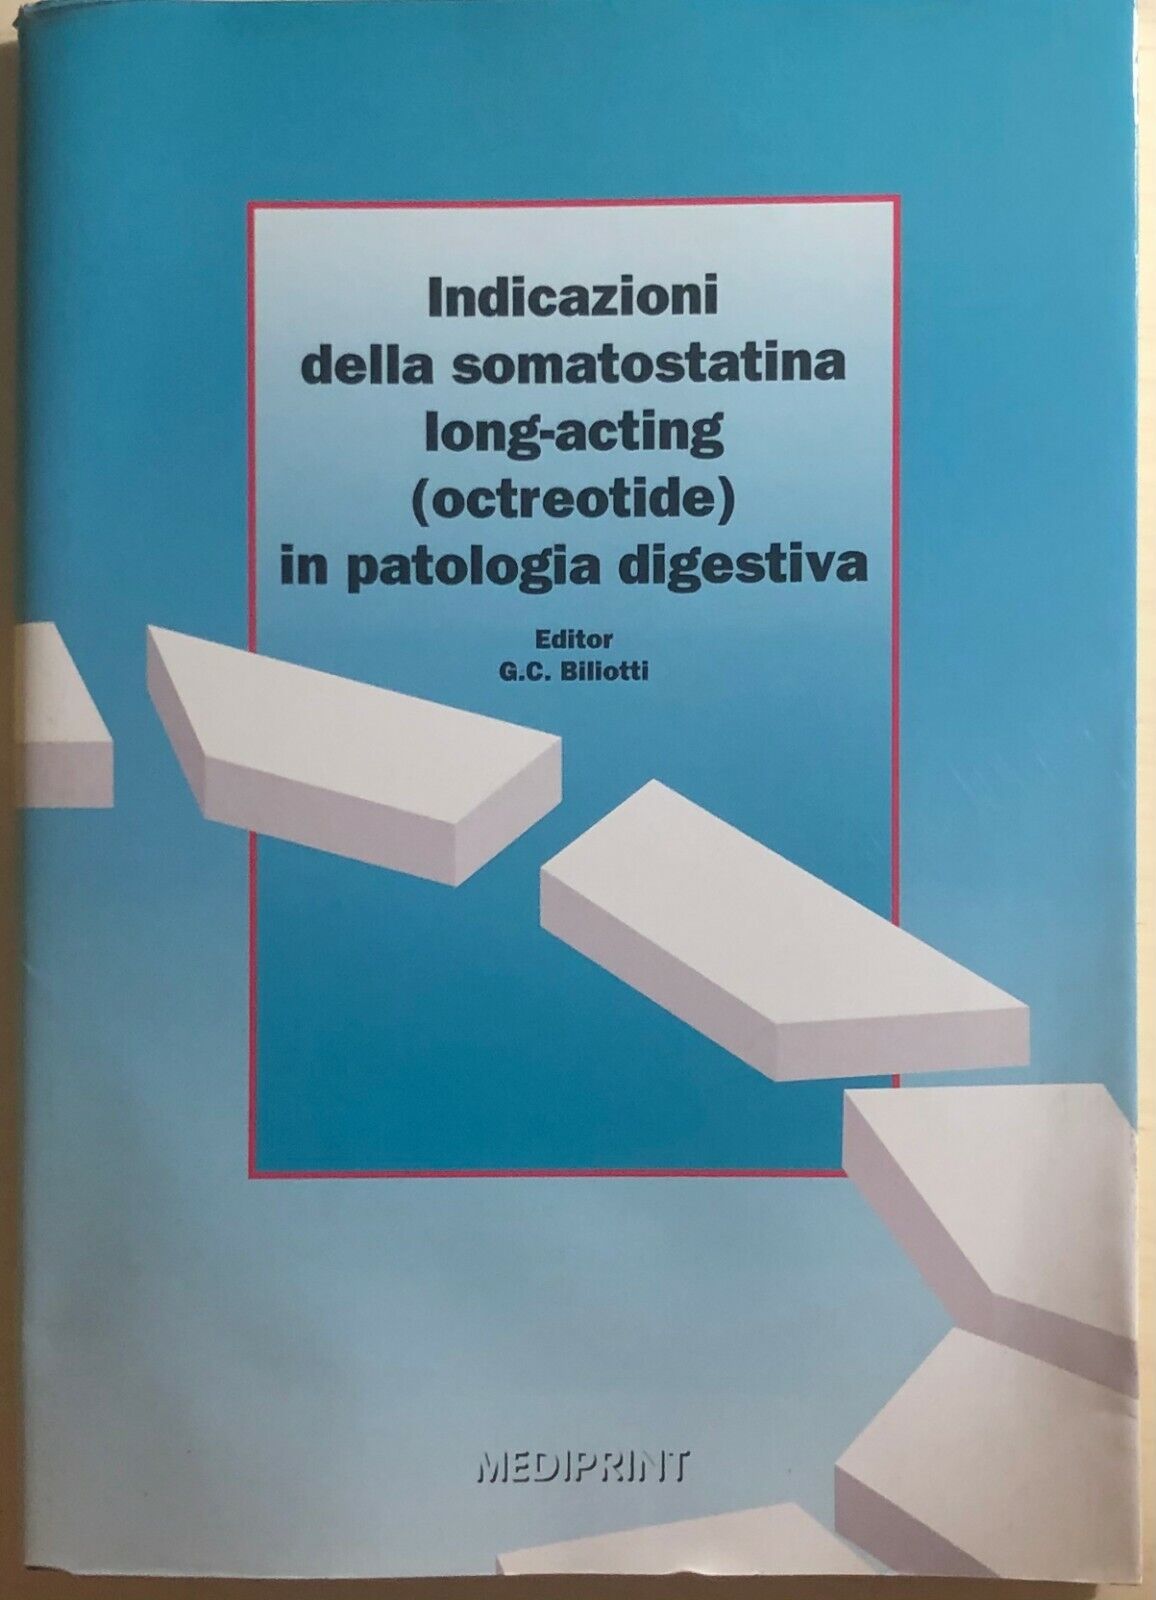 Indicazioni della somatostatina long-actin in patologia digestiva di G.c. Biliot